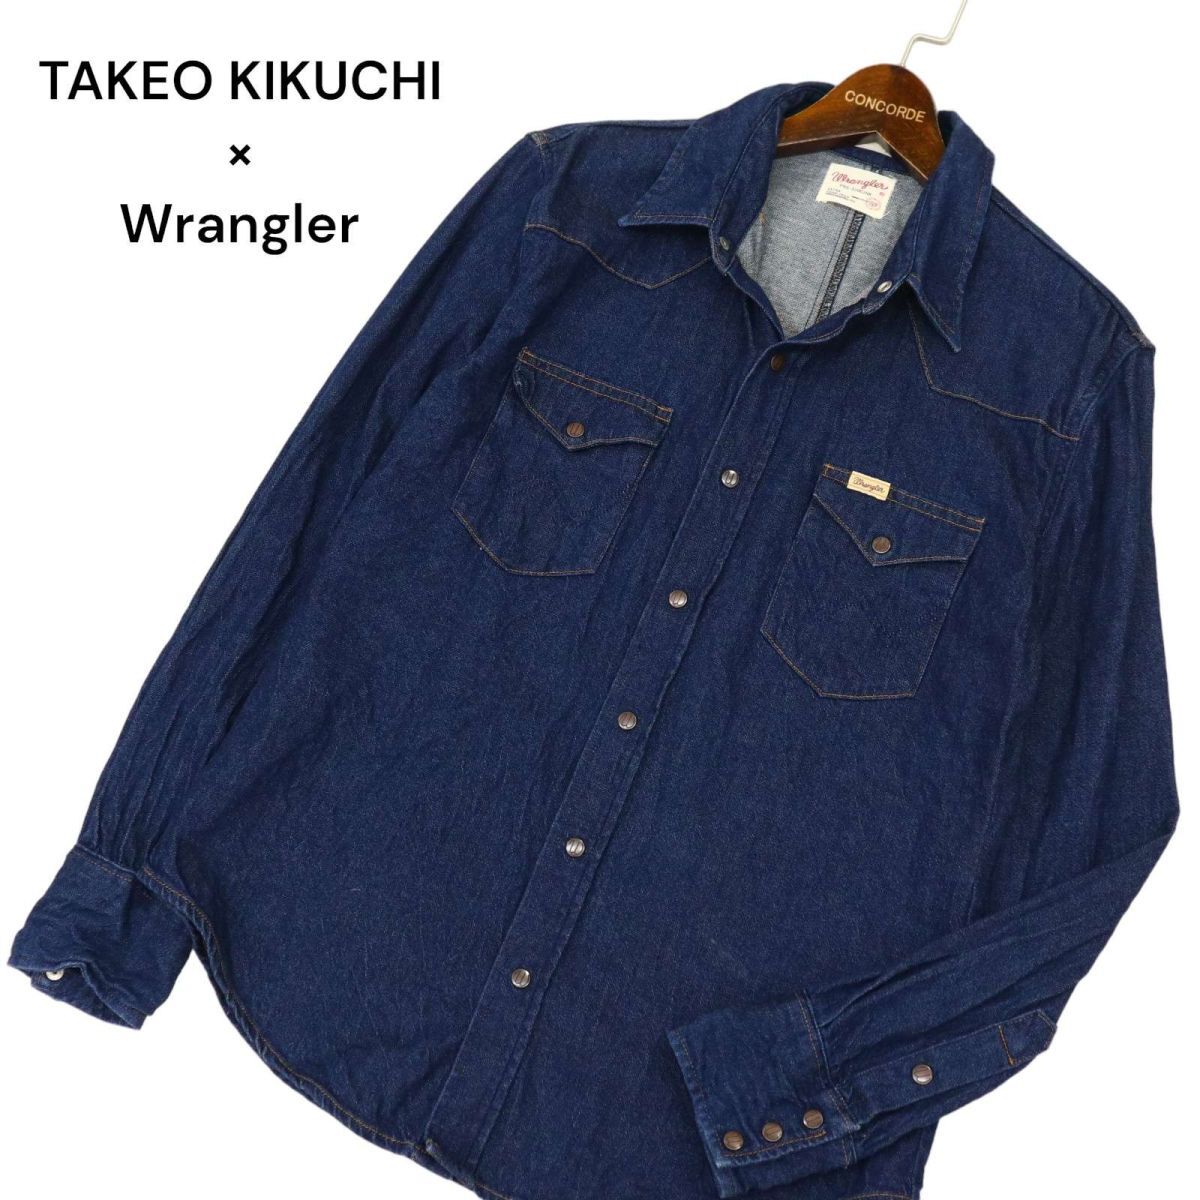 TAKEO KIKUCHI × Wrangler Takeo Kikuchi × Wrangler S9119 long sleeve Western Denim shirt Sz.XL men's large C4T01920_3#C